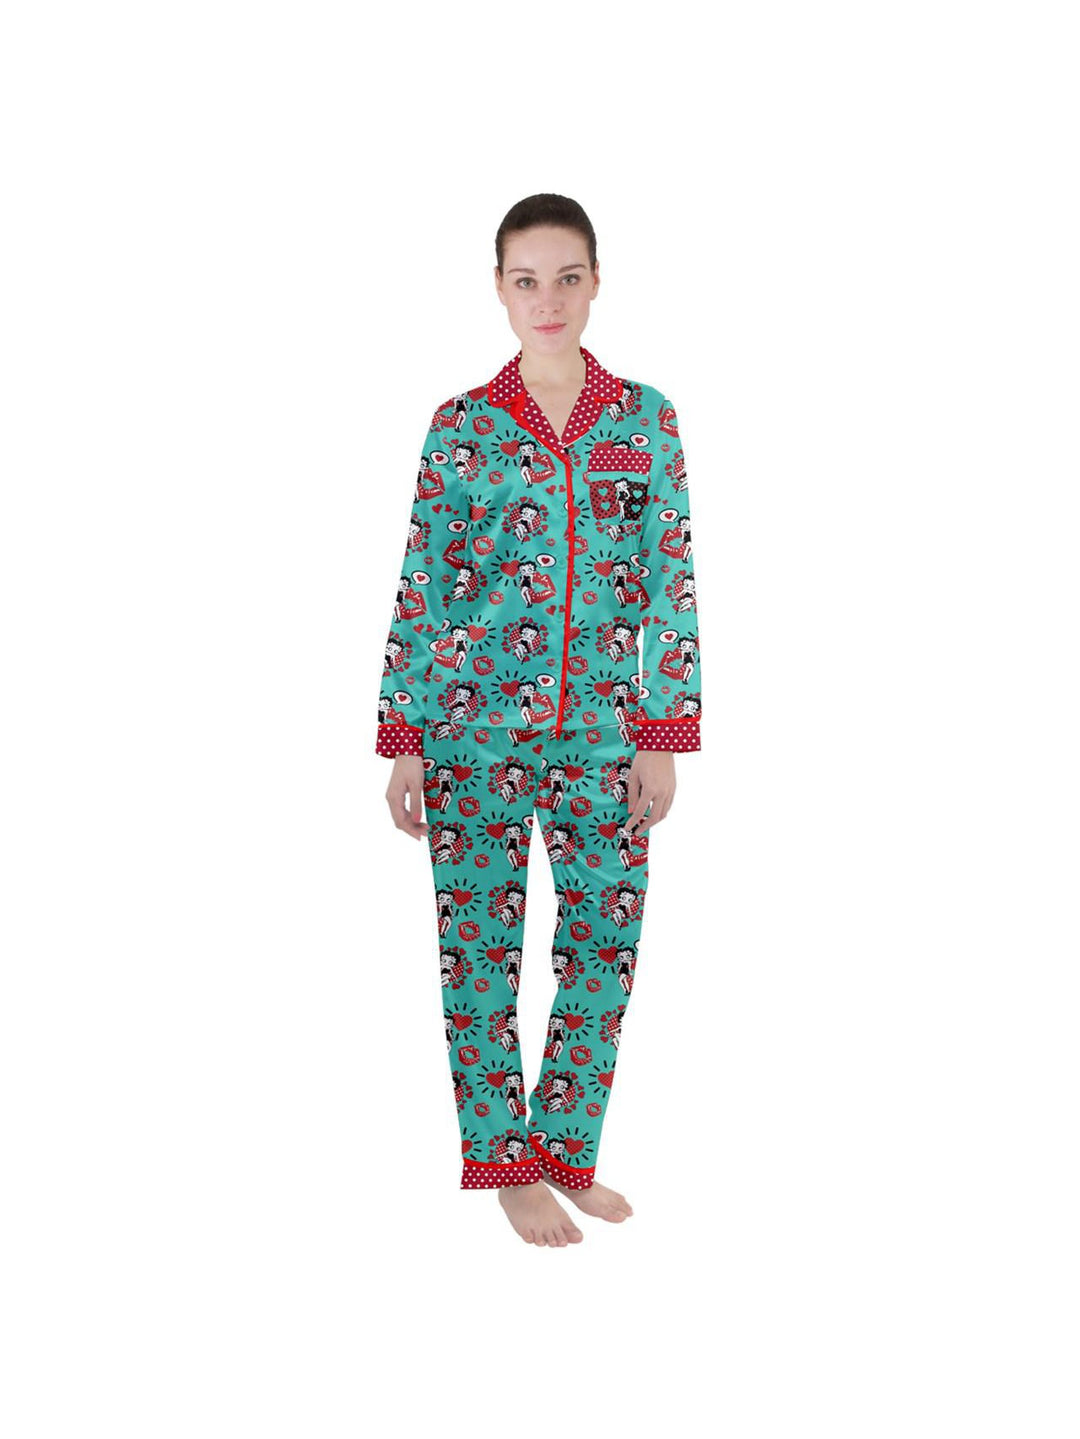 Betty Boop Women's Long Sleeve Satin Pajamas Set